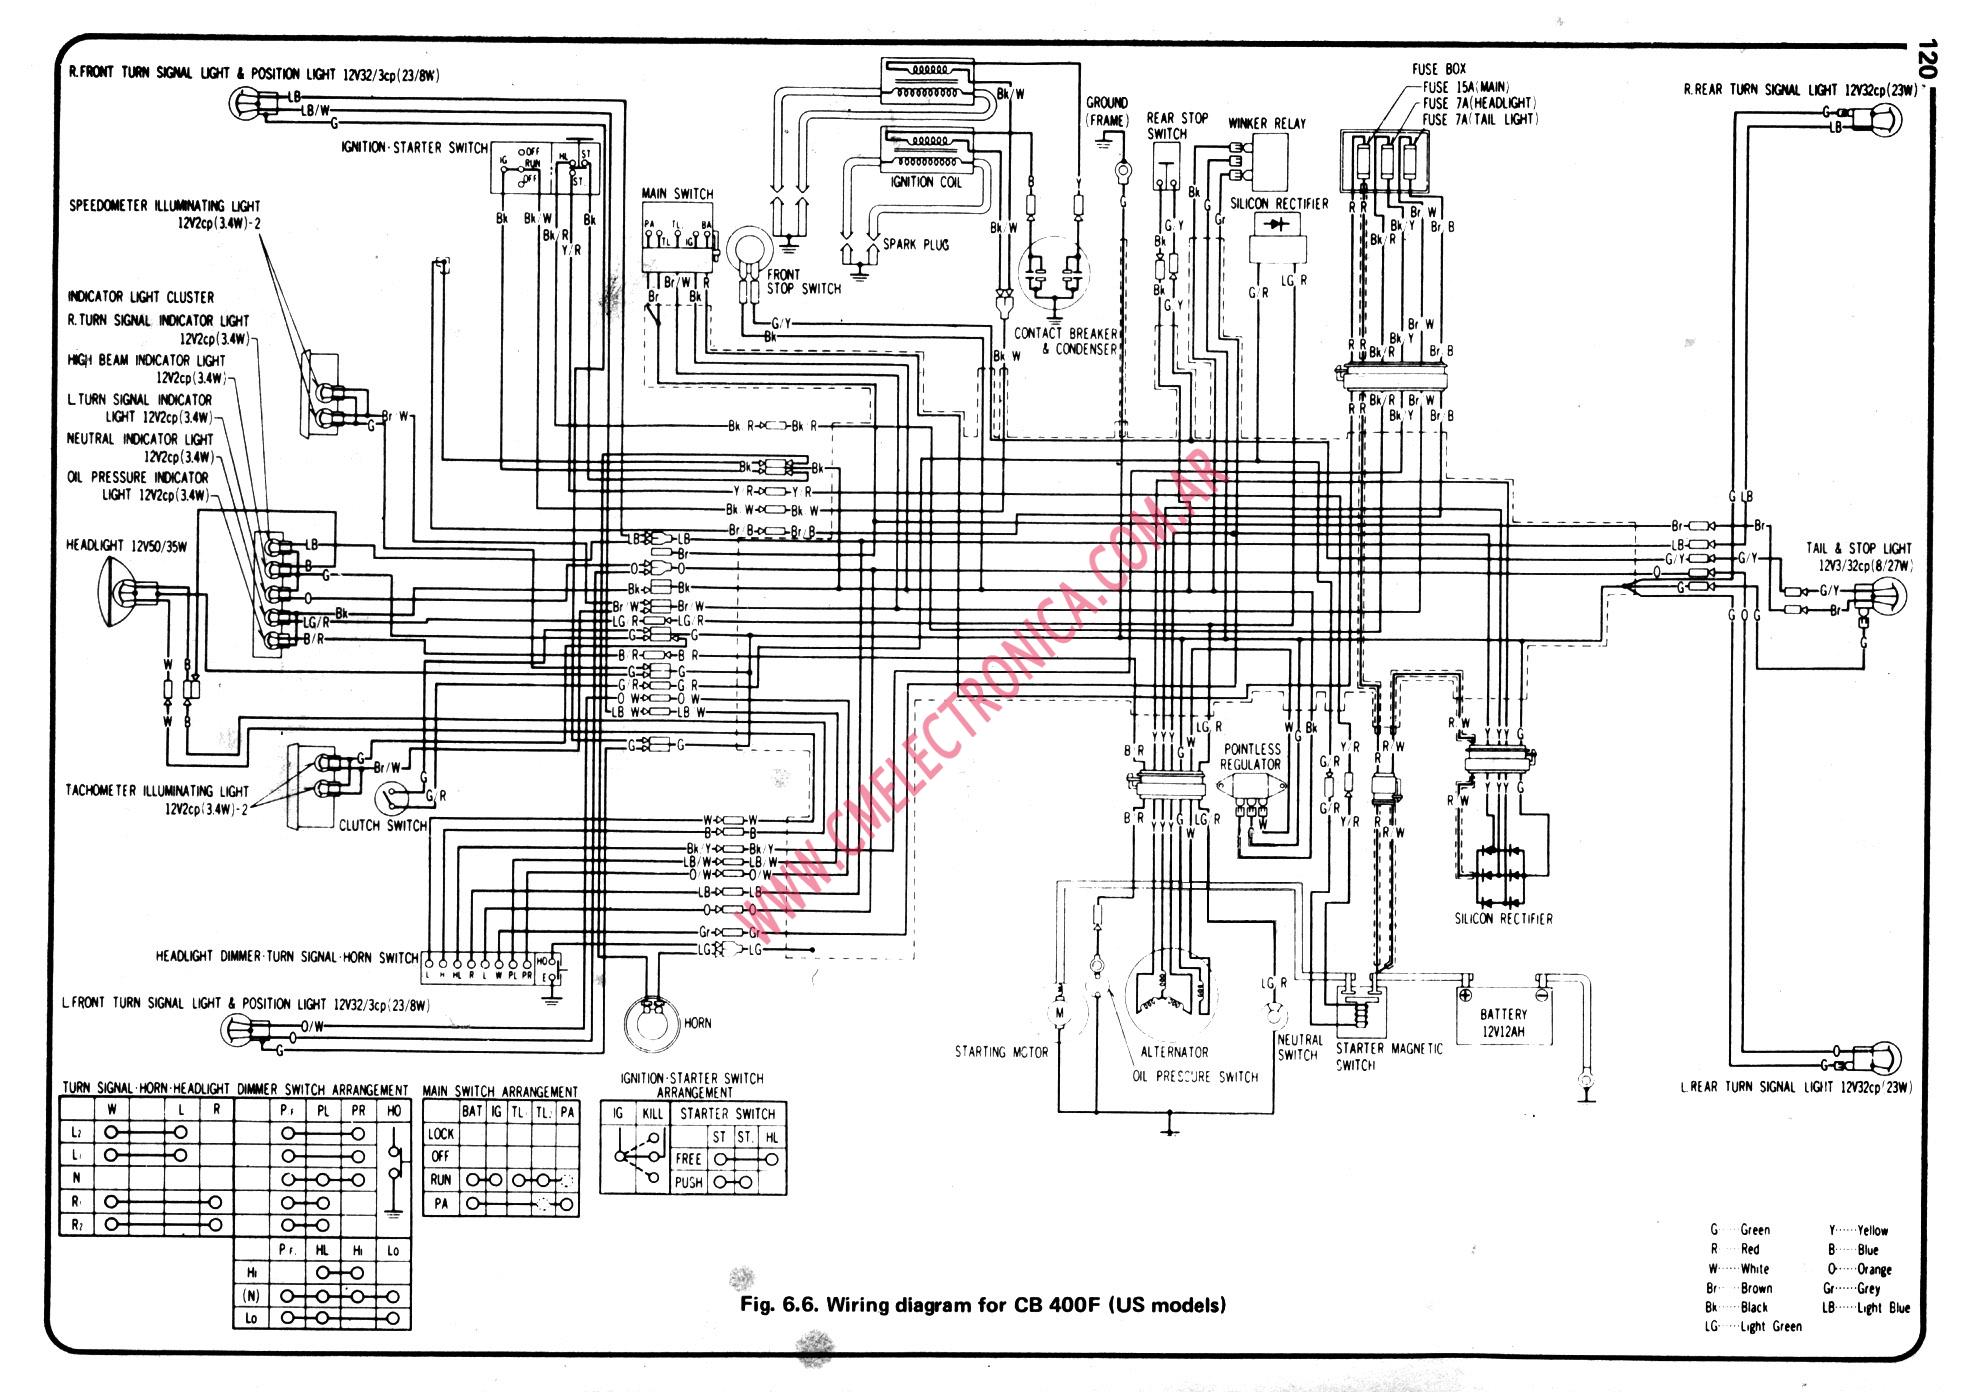 Diagram Honda Cb350f Wiring Diagram Full Version Hd Quality Wiring Diagram Meditelwiring Unpugnounmorto It